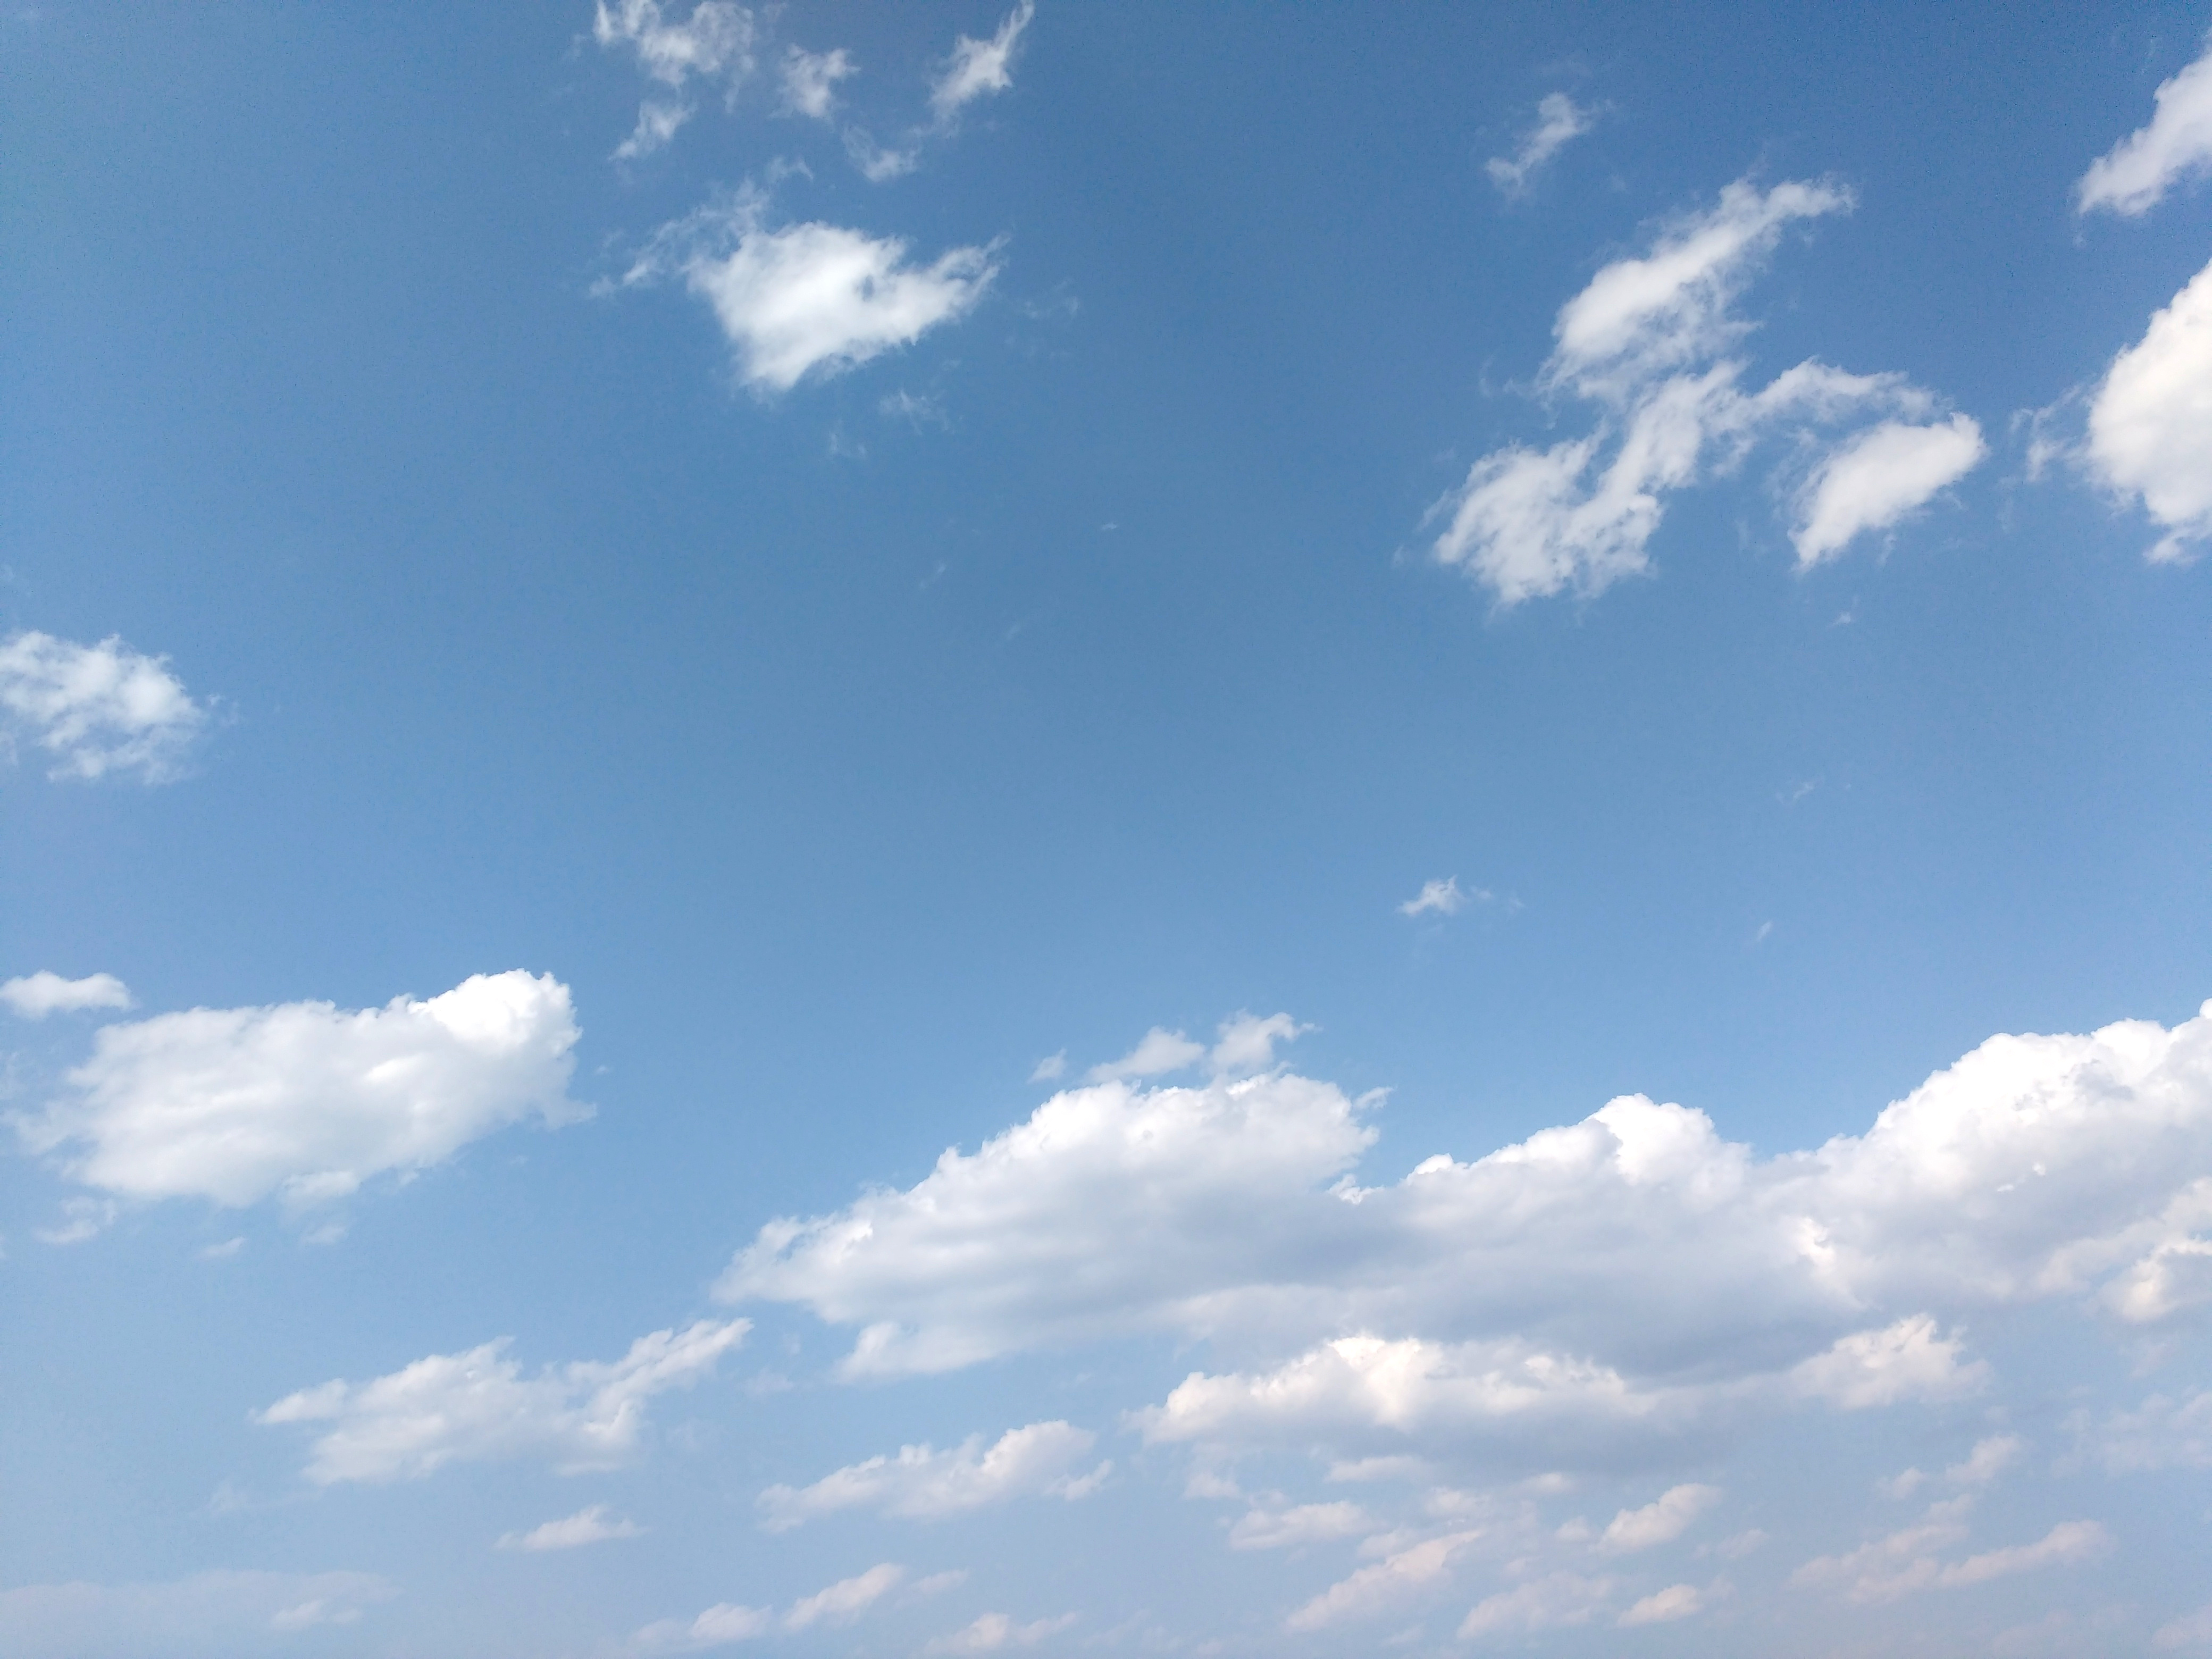 https://www.photos-public-domain.com/wp-content/uploads/2018/08/blue-sky-with-clouds-texture.jpg